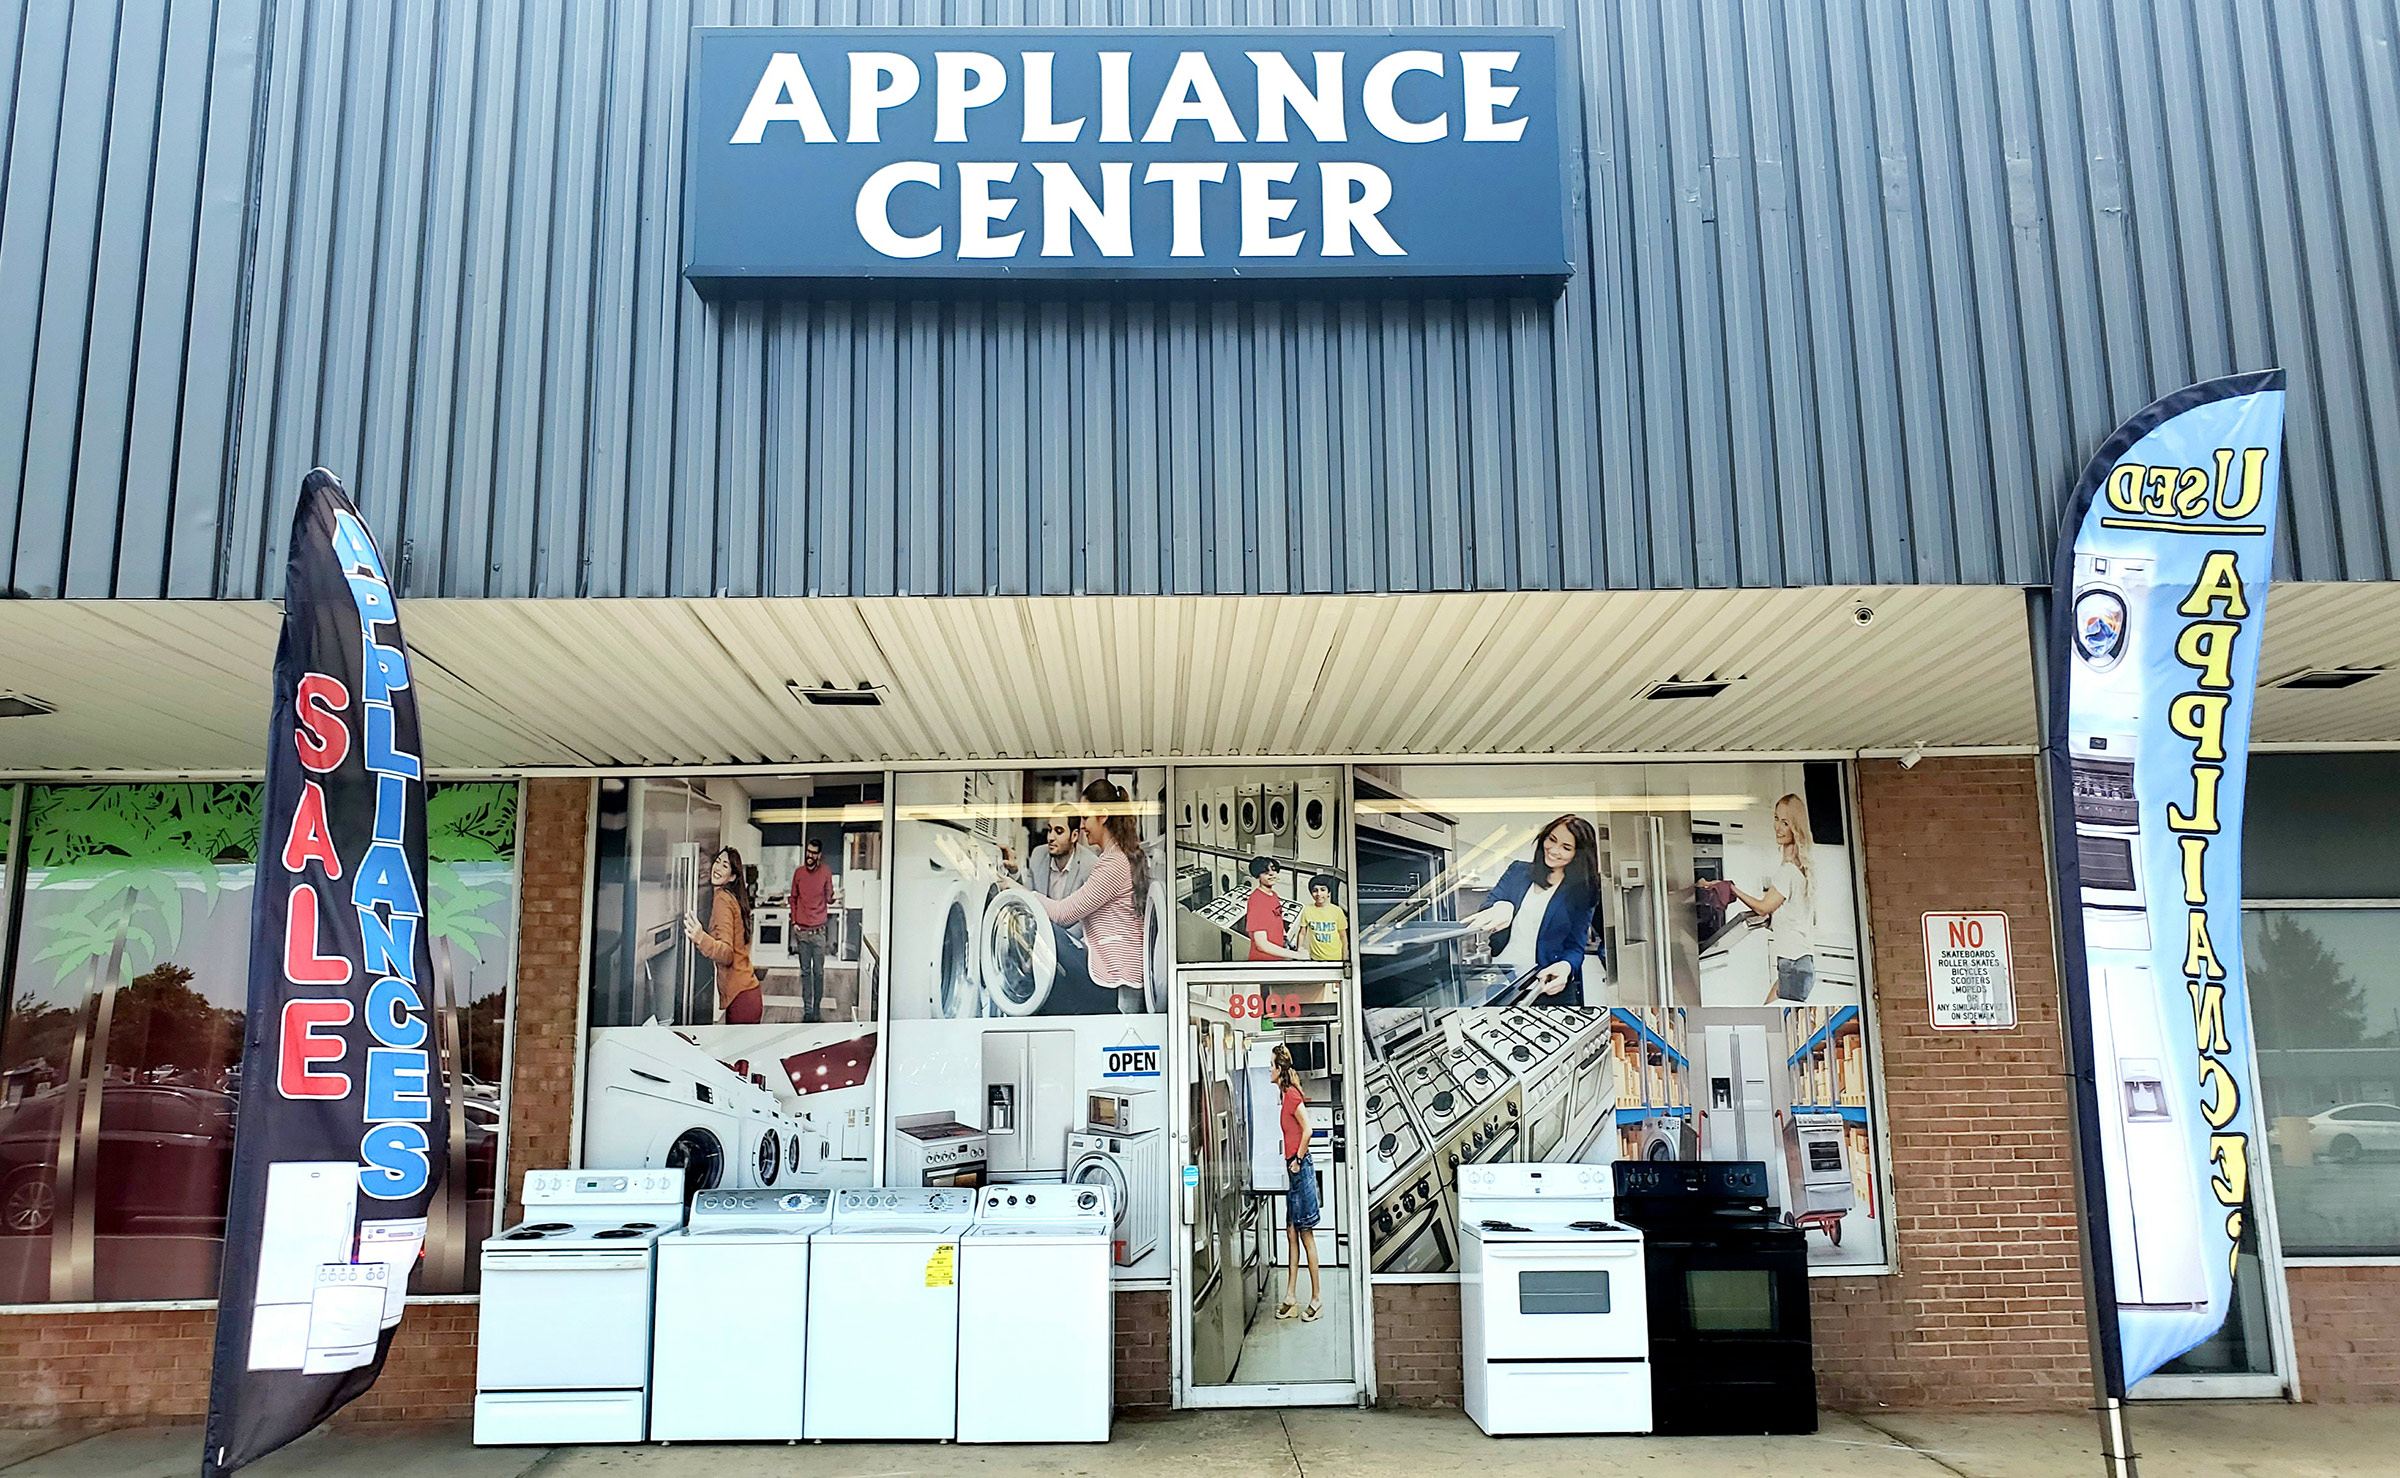 Appliance Center Manassas VA exterior